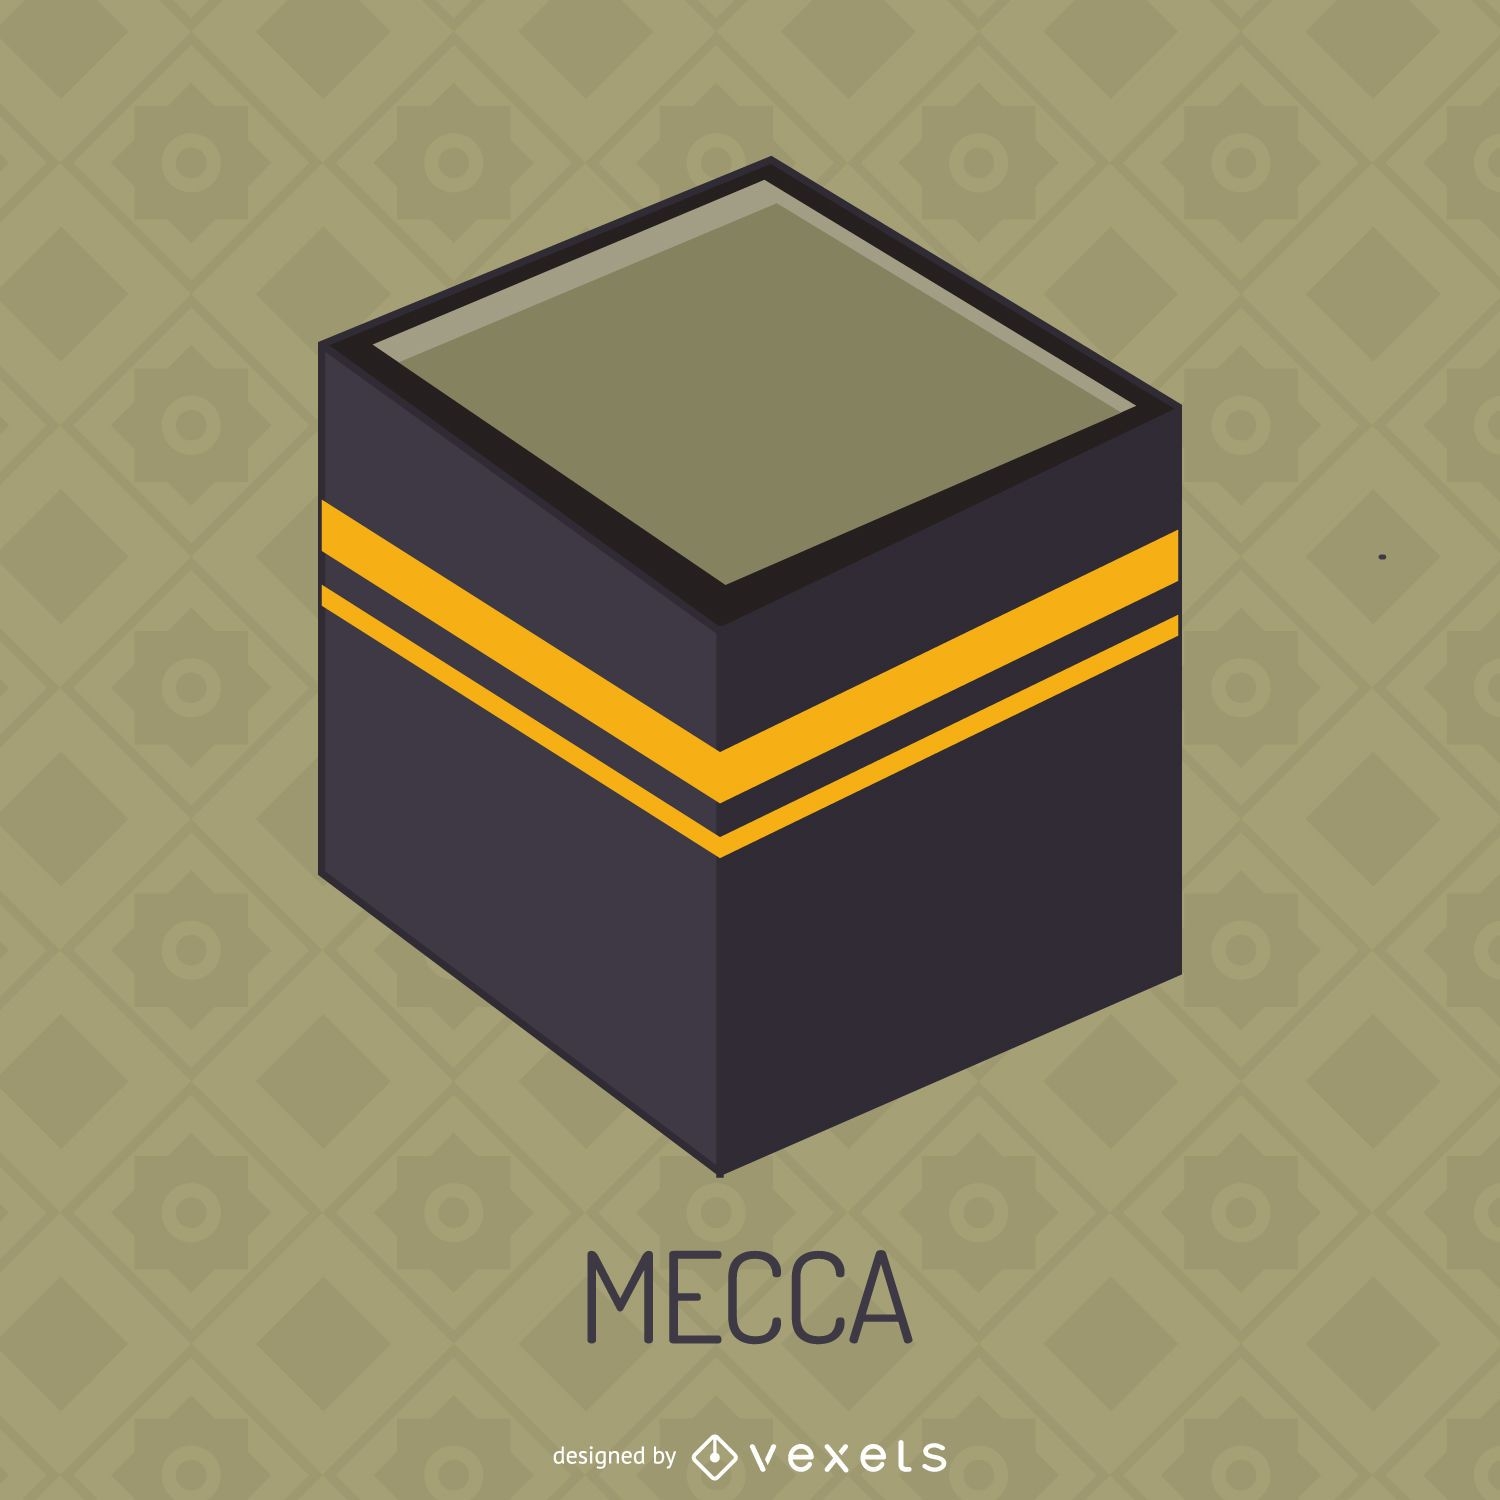 Kaaba in Mecca illustration